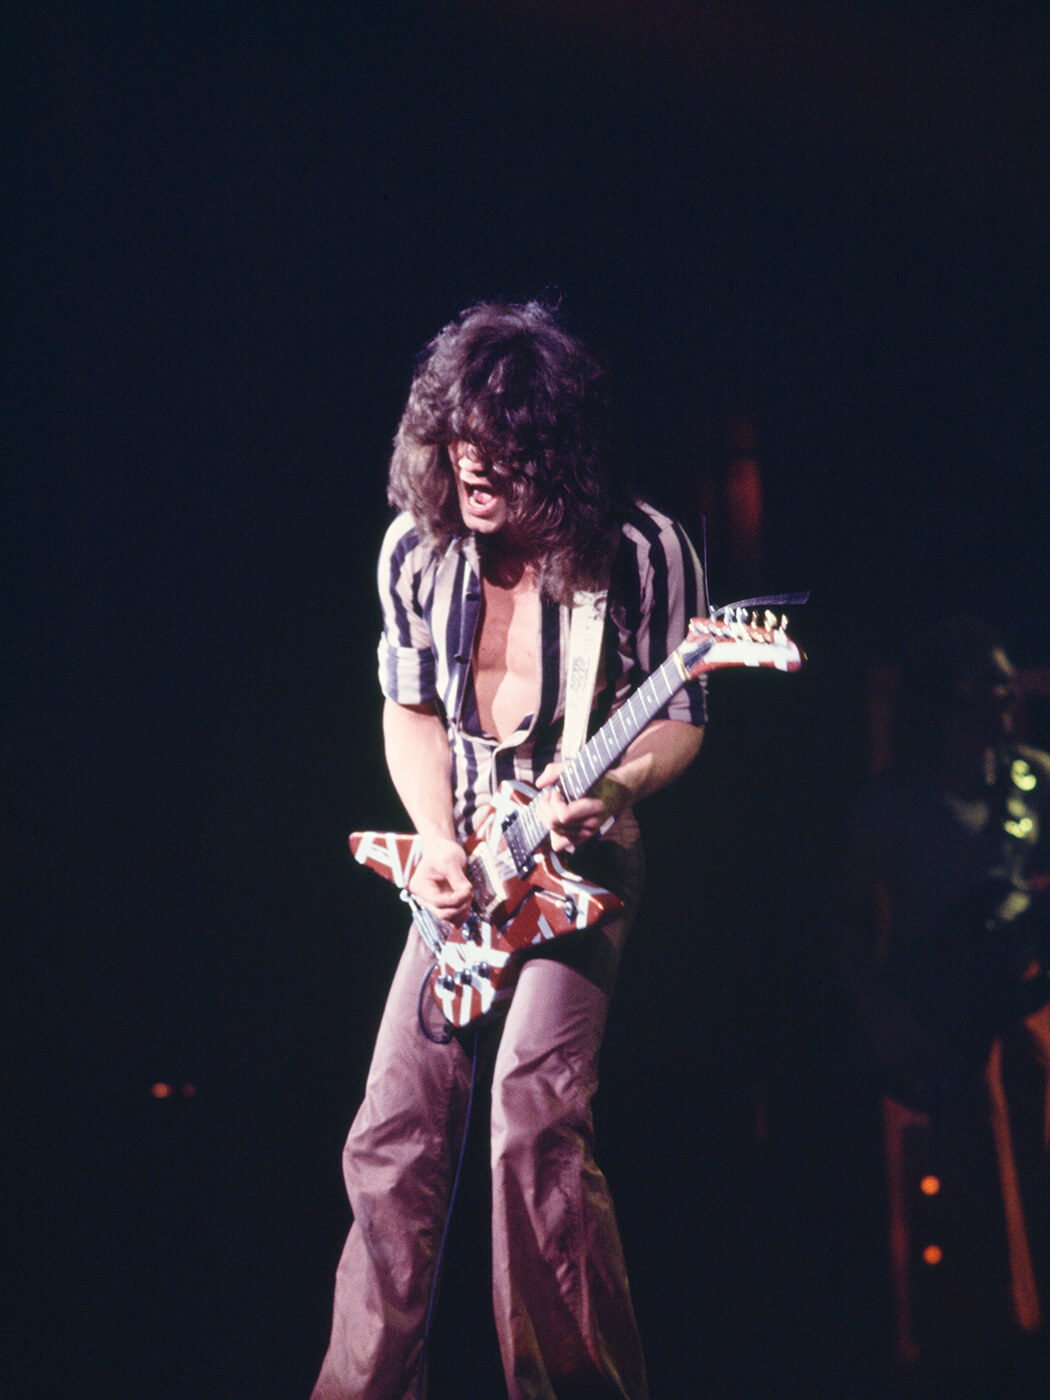 Eddie Van Halen performing during Van Halen’s first concert tour at The Palladium, New York, in 1978, photo by David Tan/Shinko Music via Getty Images